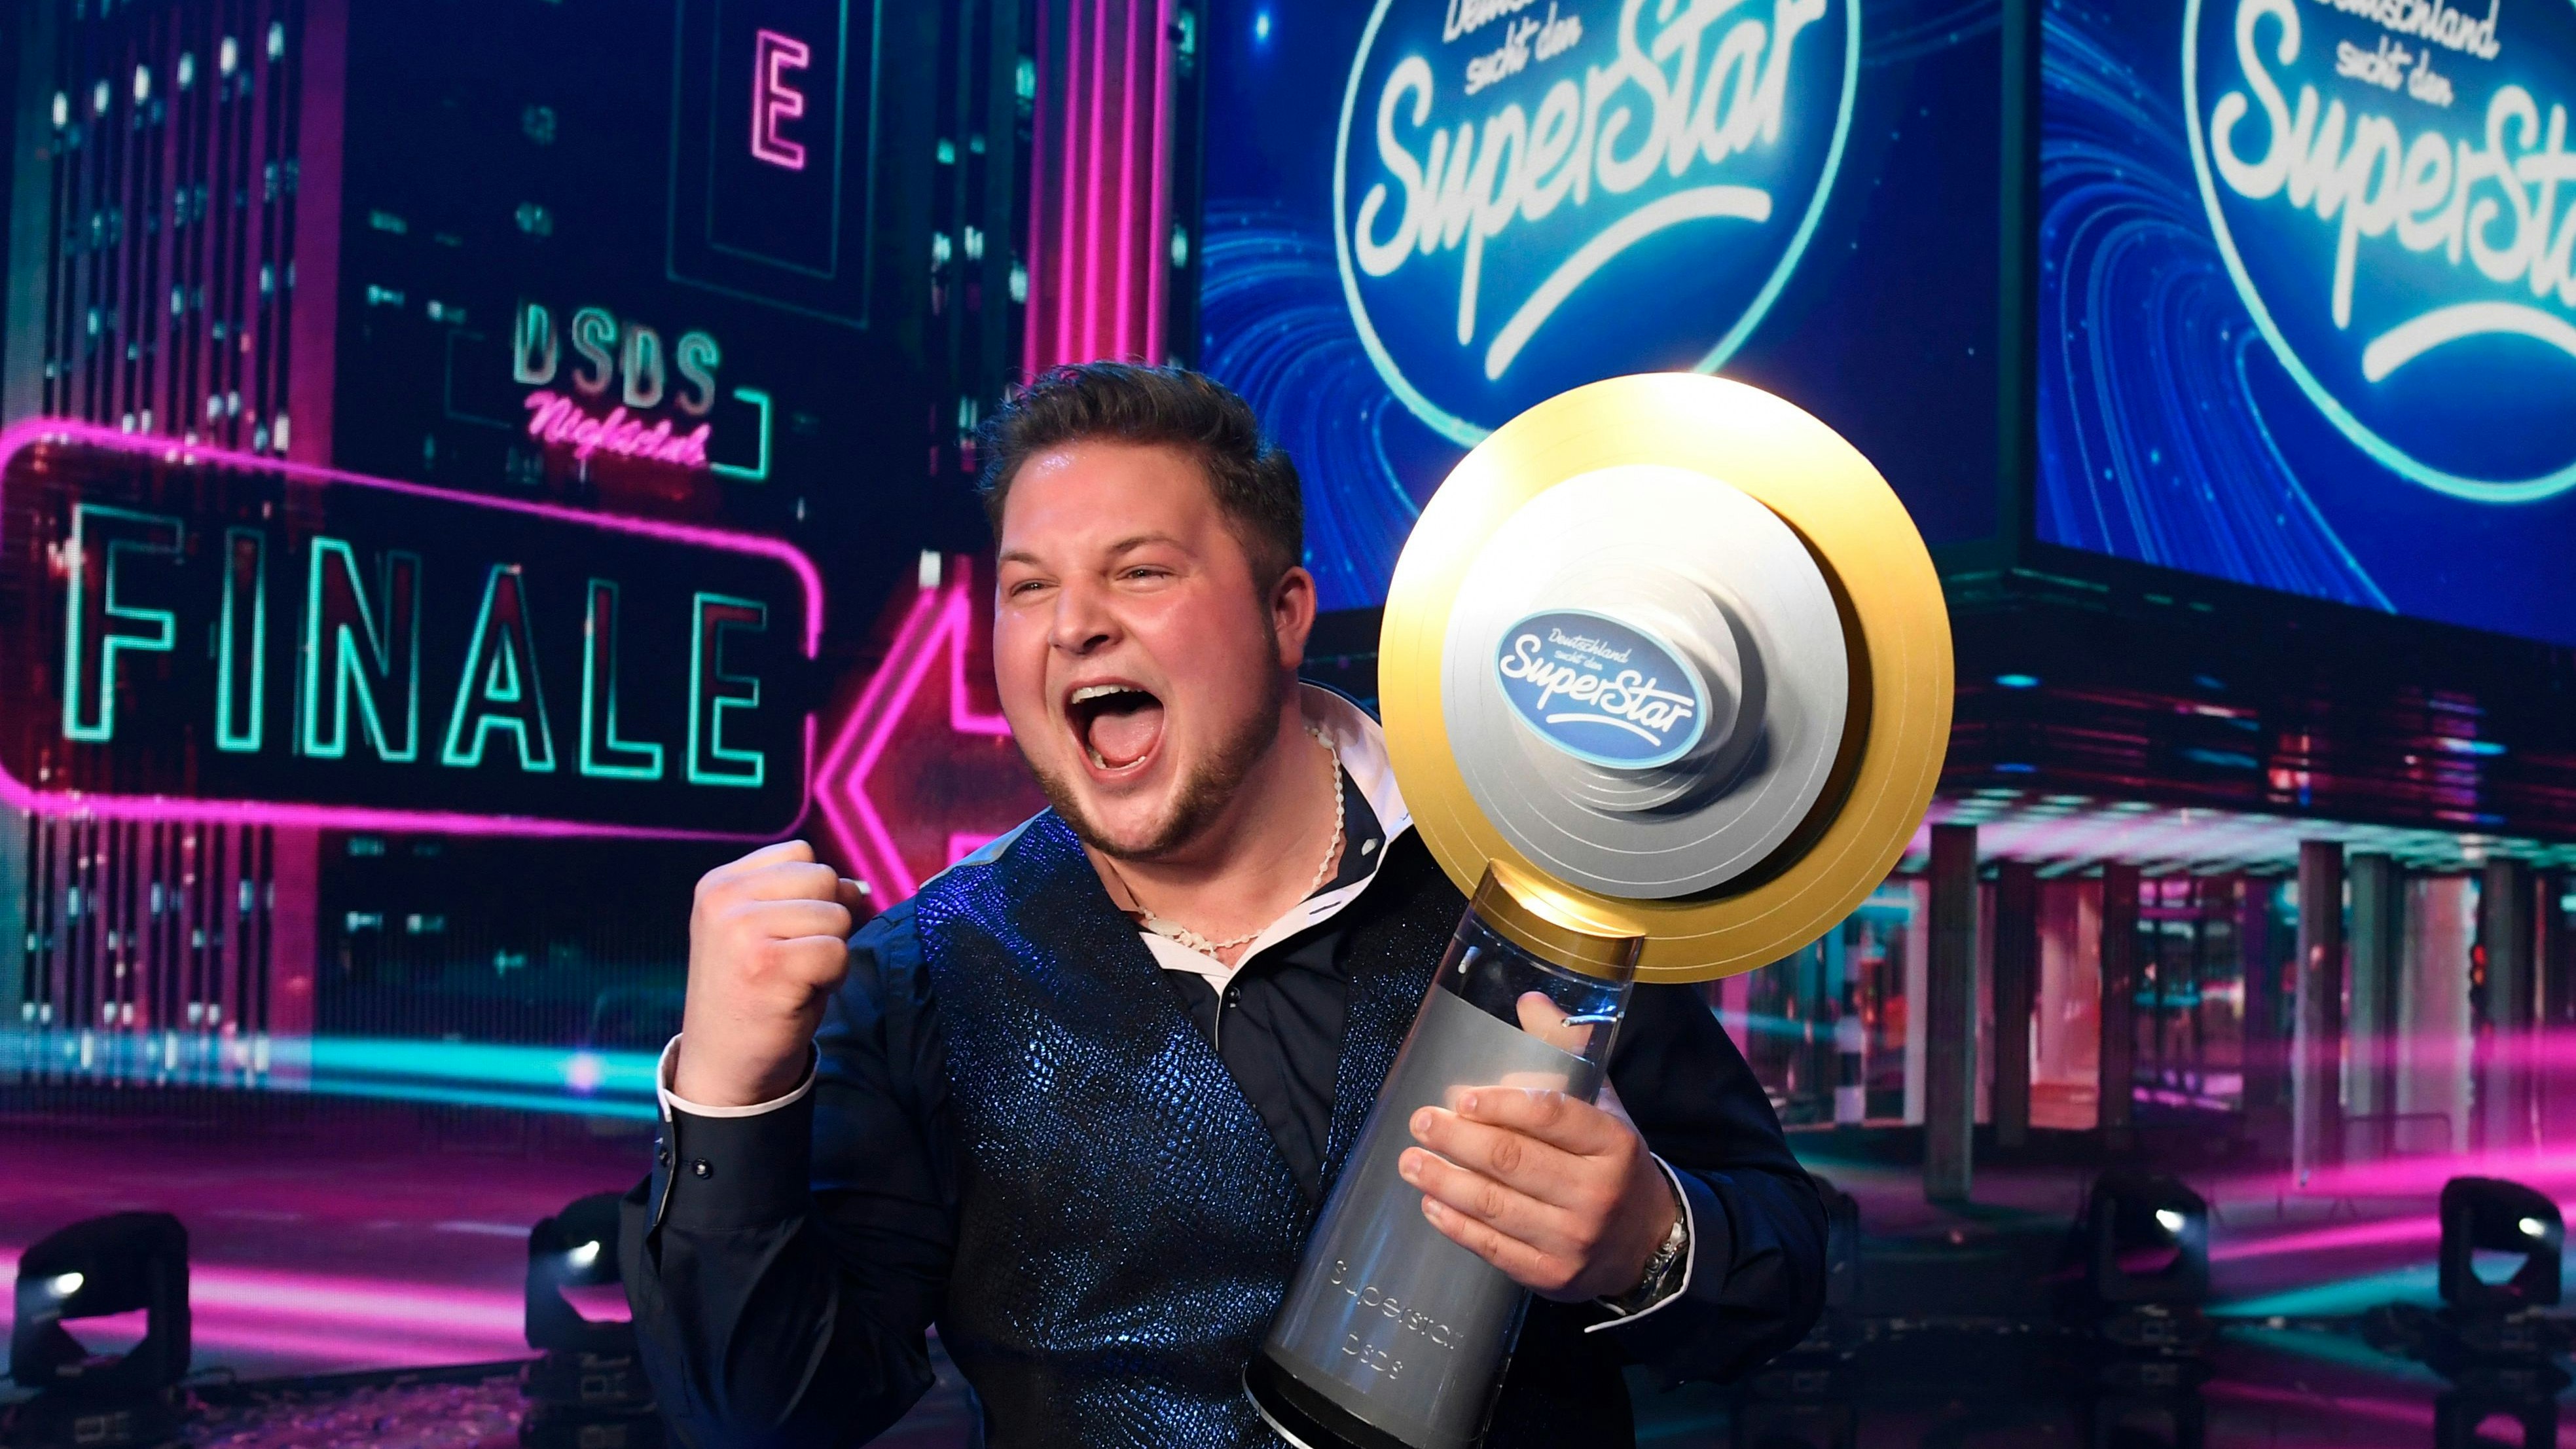 Harry Laffontien präsentiert den Siegerpokal nachdem er das Finale der RTL-Sendung "Deutschland sucht den Superstar" (DSDS) gewonnen hat. Foto: dpa | Roberto Pfeil